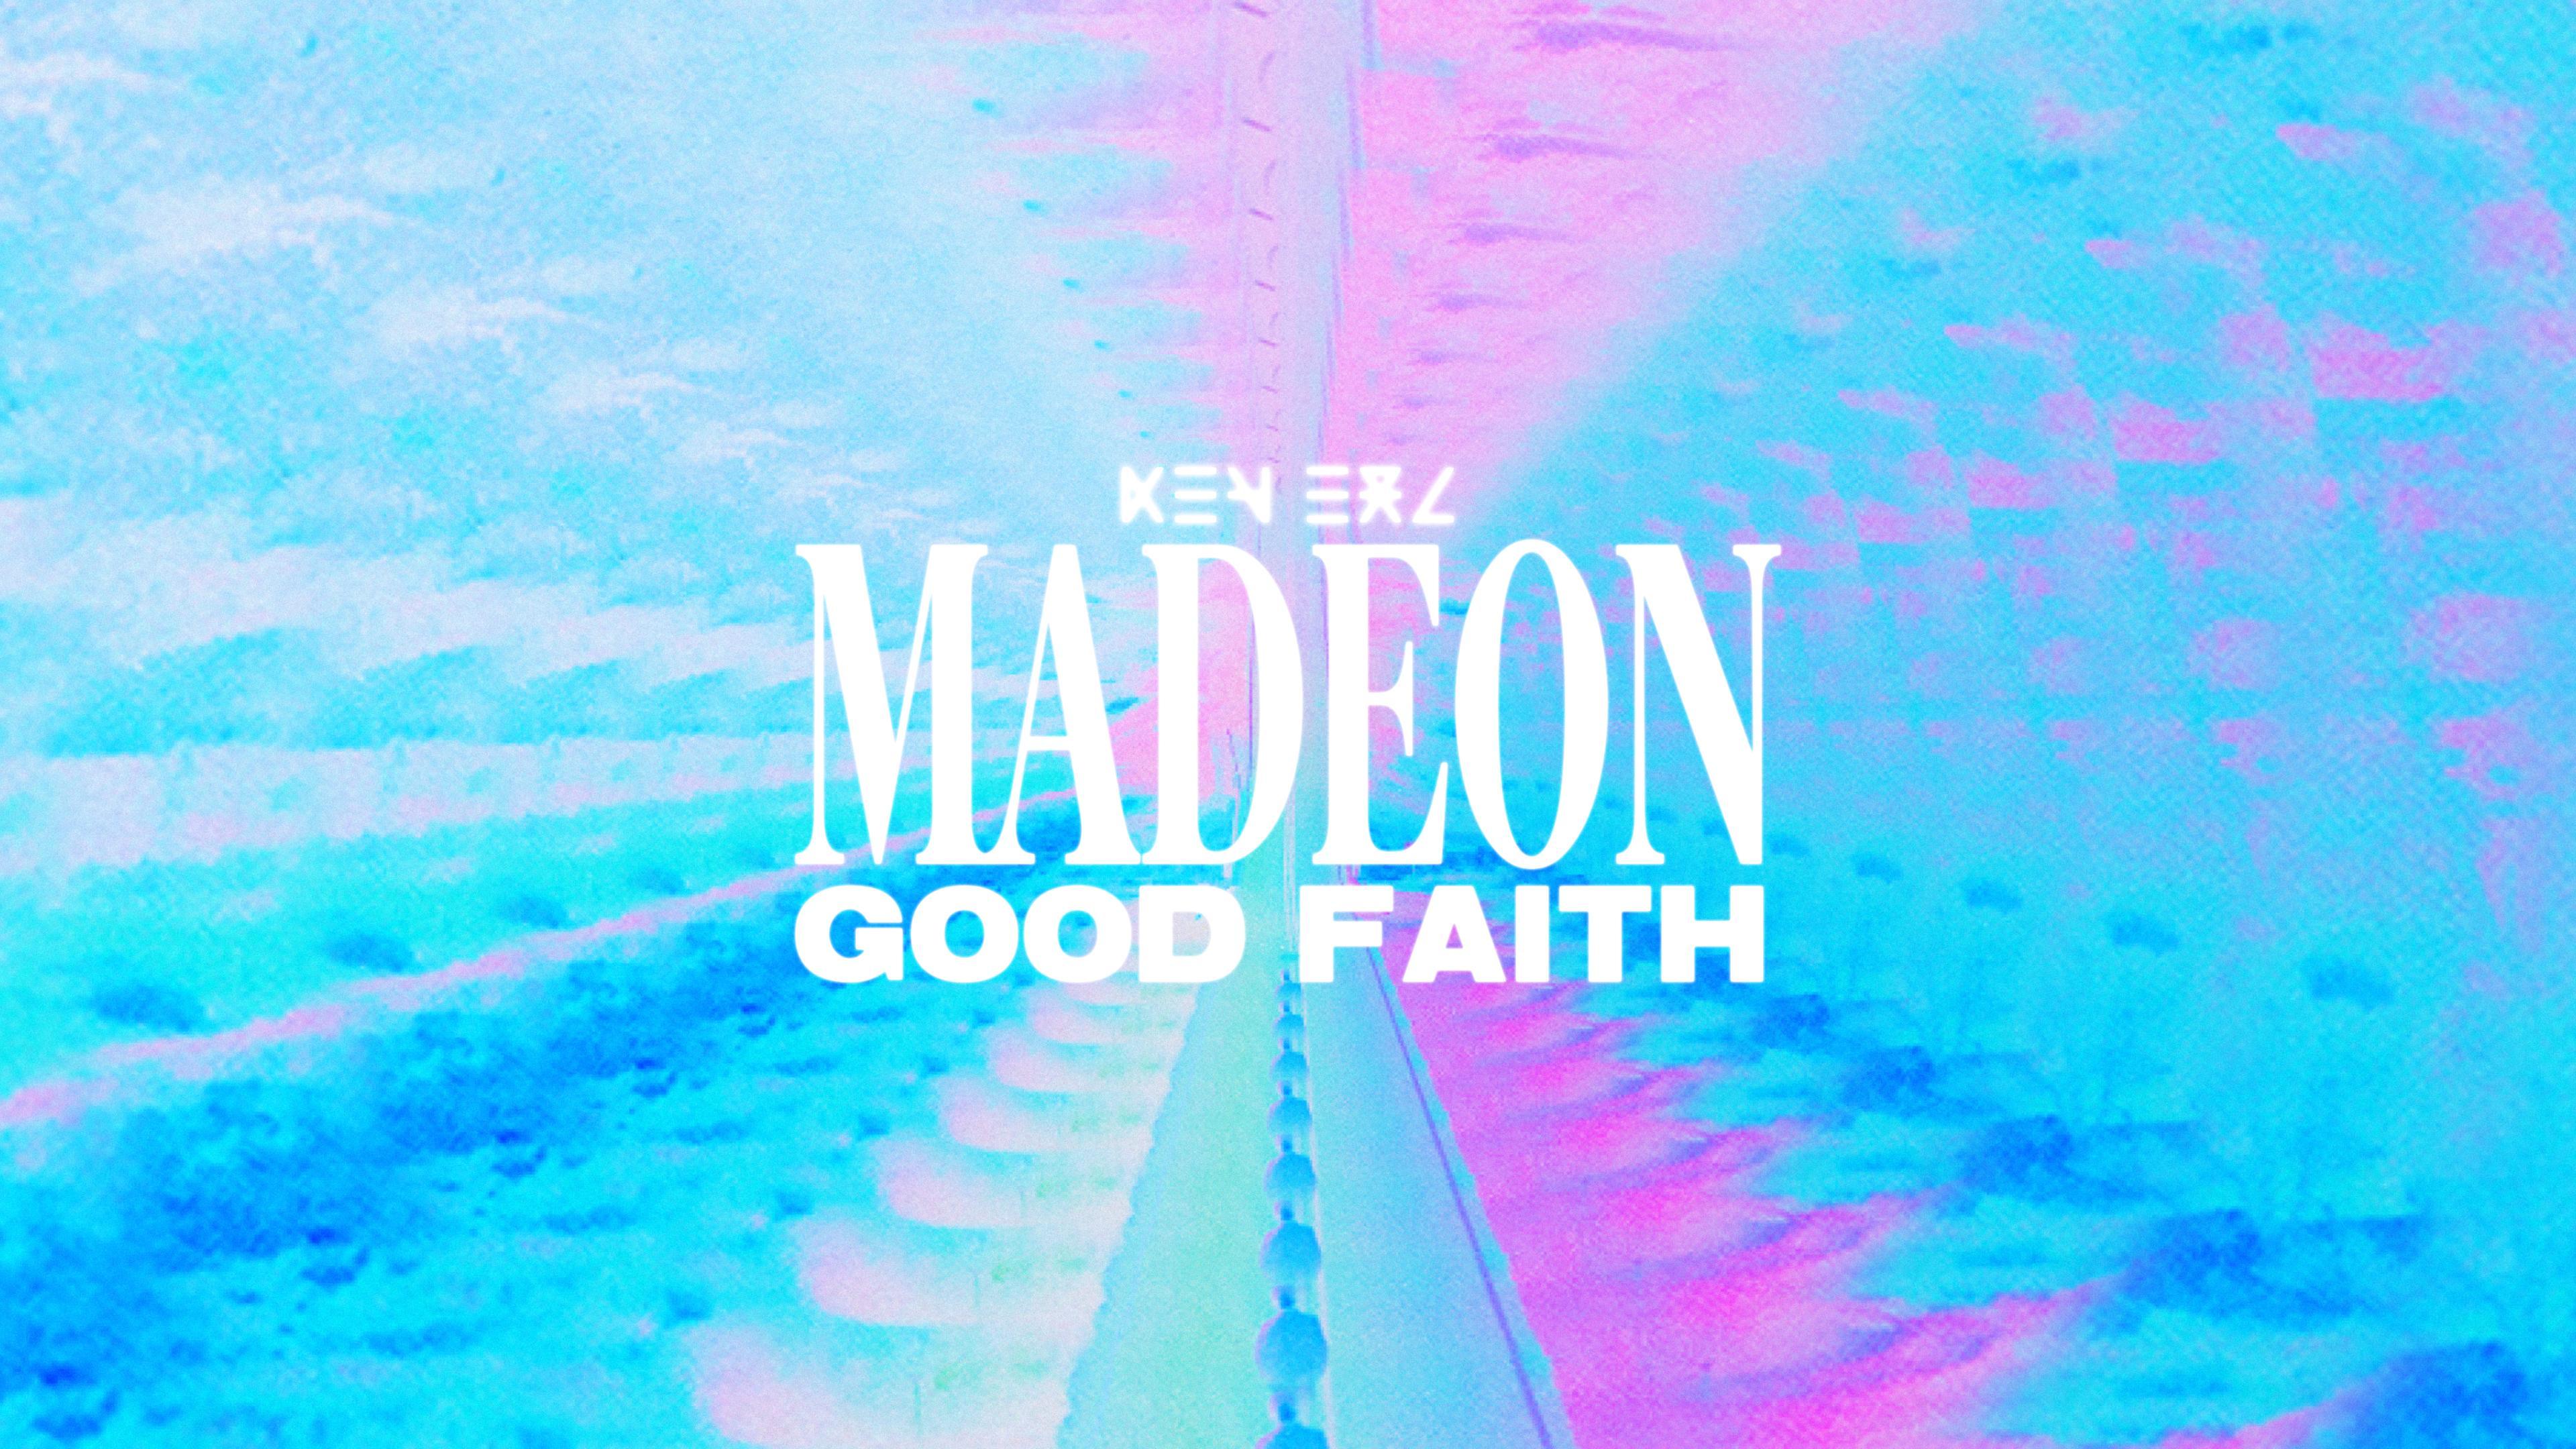 New Era / Madeon / Good Faith